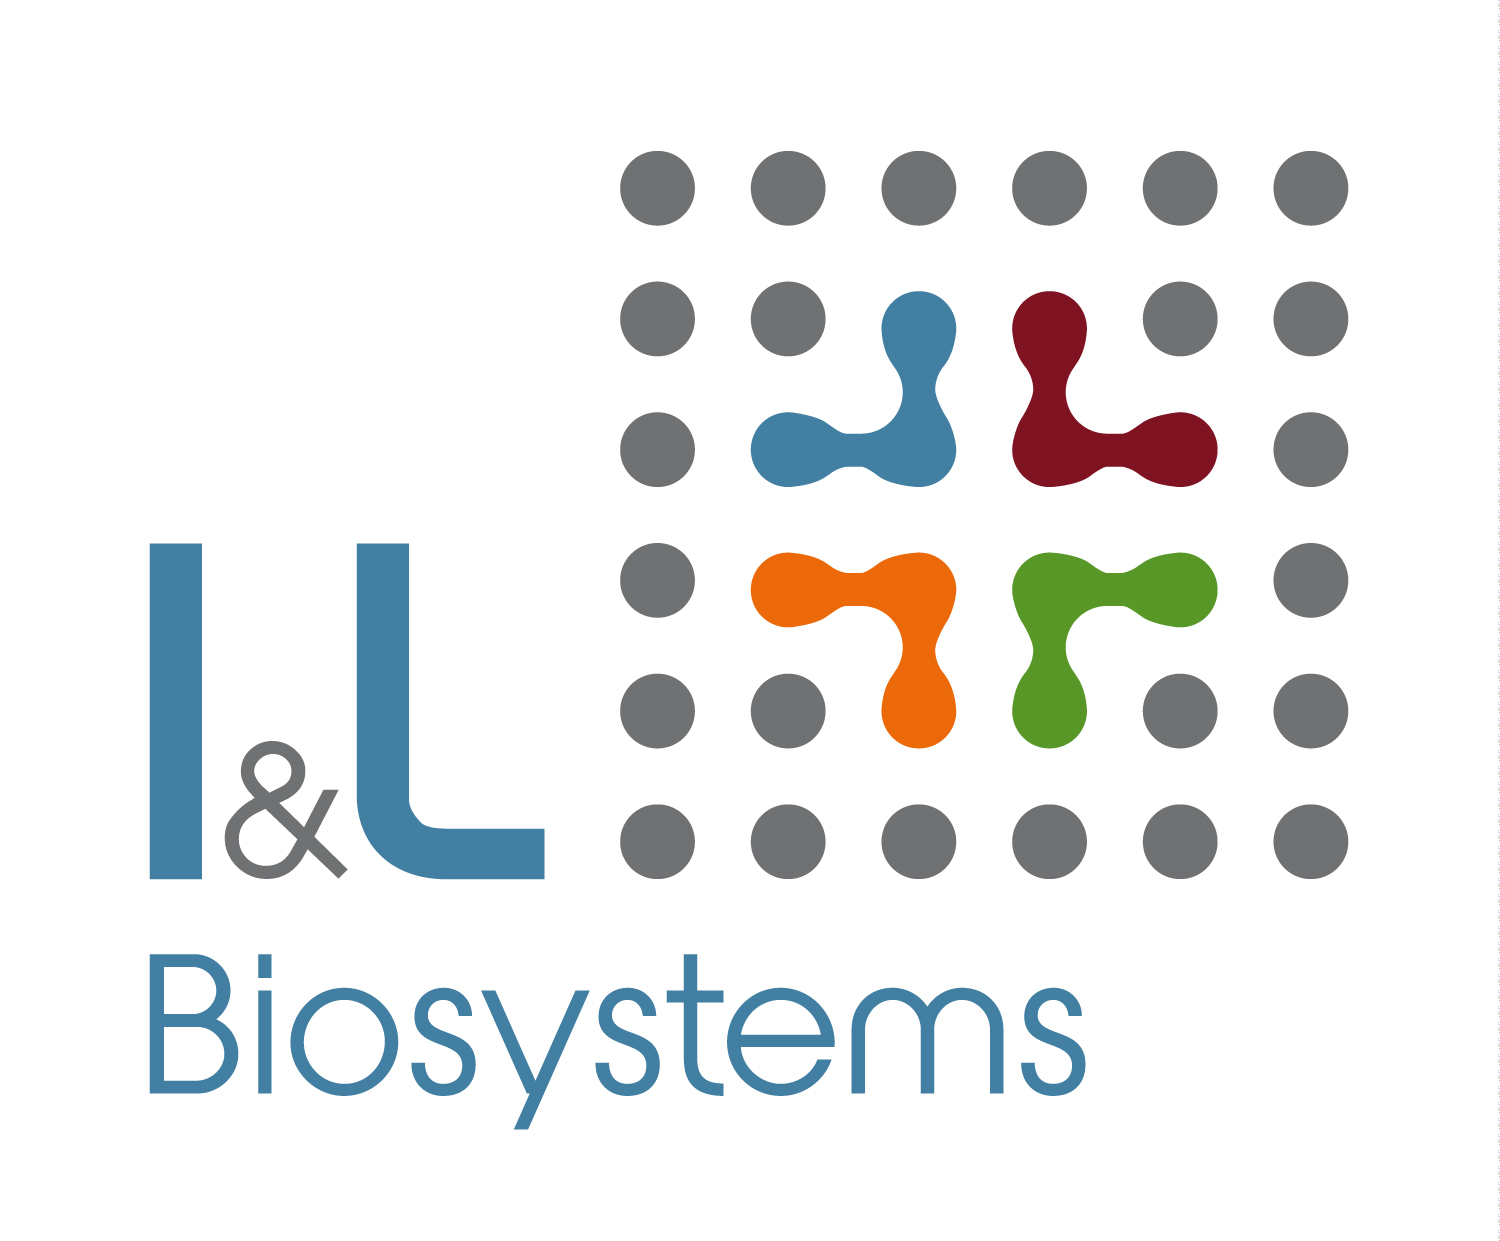 I&L Biosystems